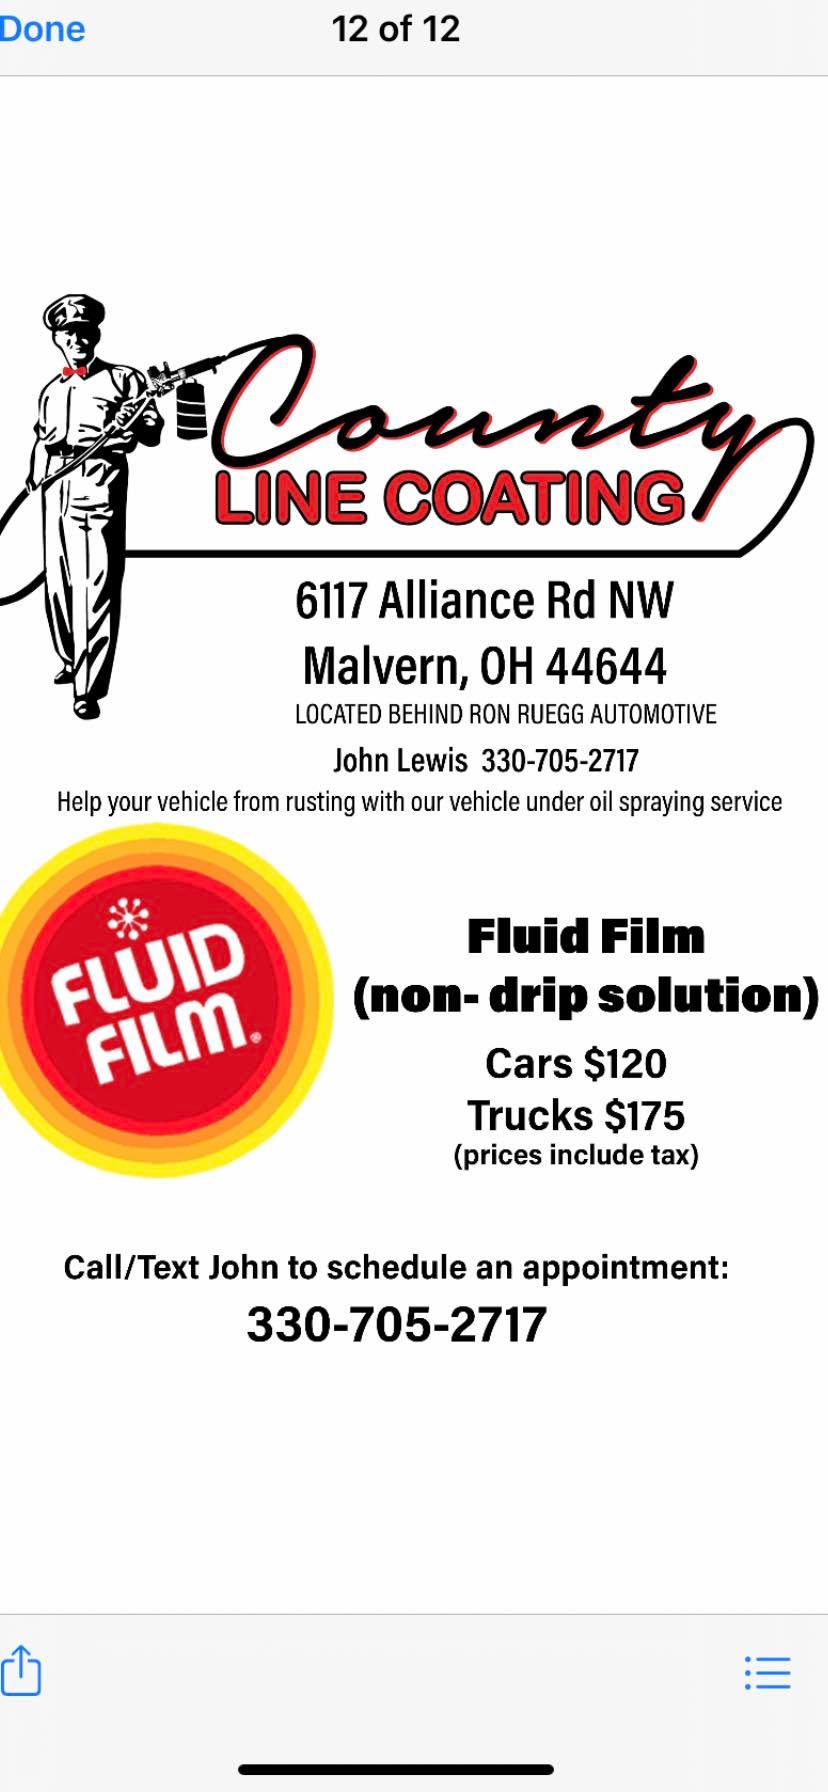 County Line Coating 6117 Alliance Rd NW, Malvern Ohio 44644